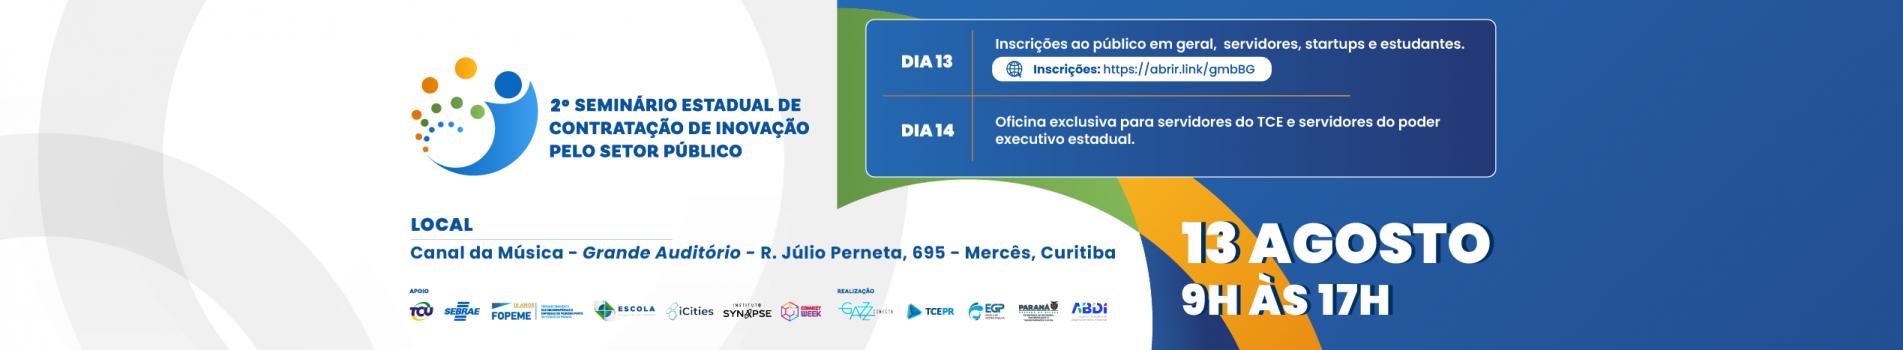 midias_2deg_seminario_estadual_de_contratacao_de_inovacao_pelo_setor_publico_2307-final-10_1.png